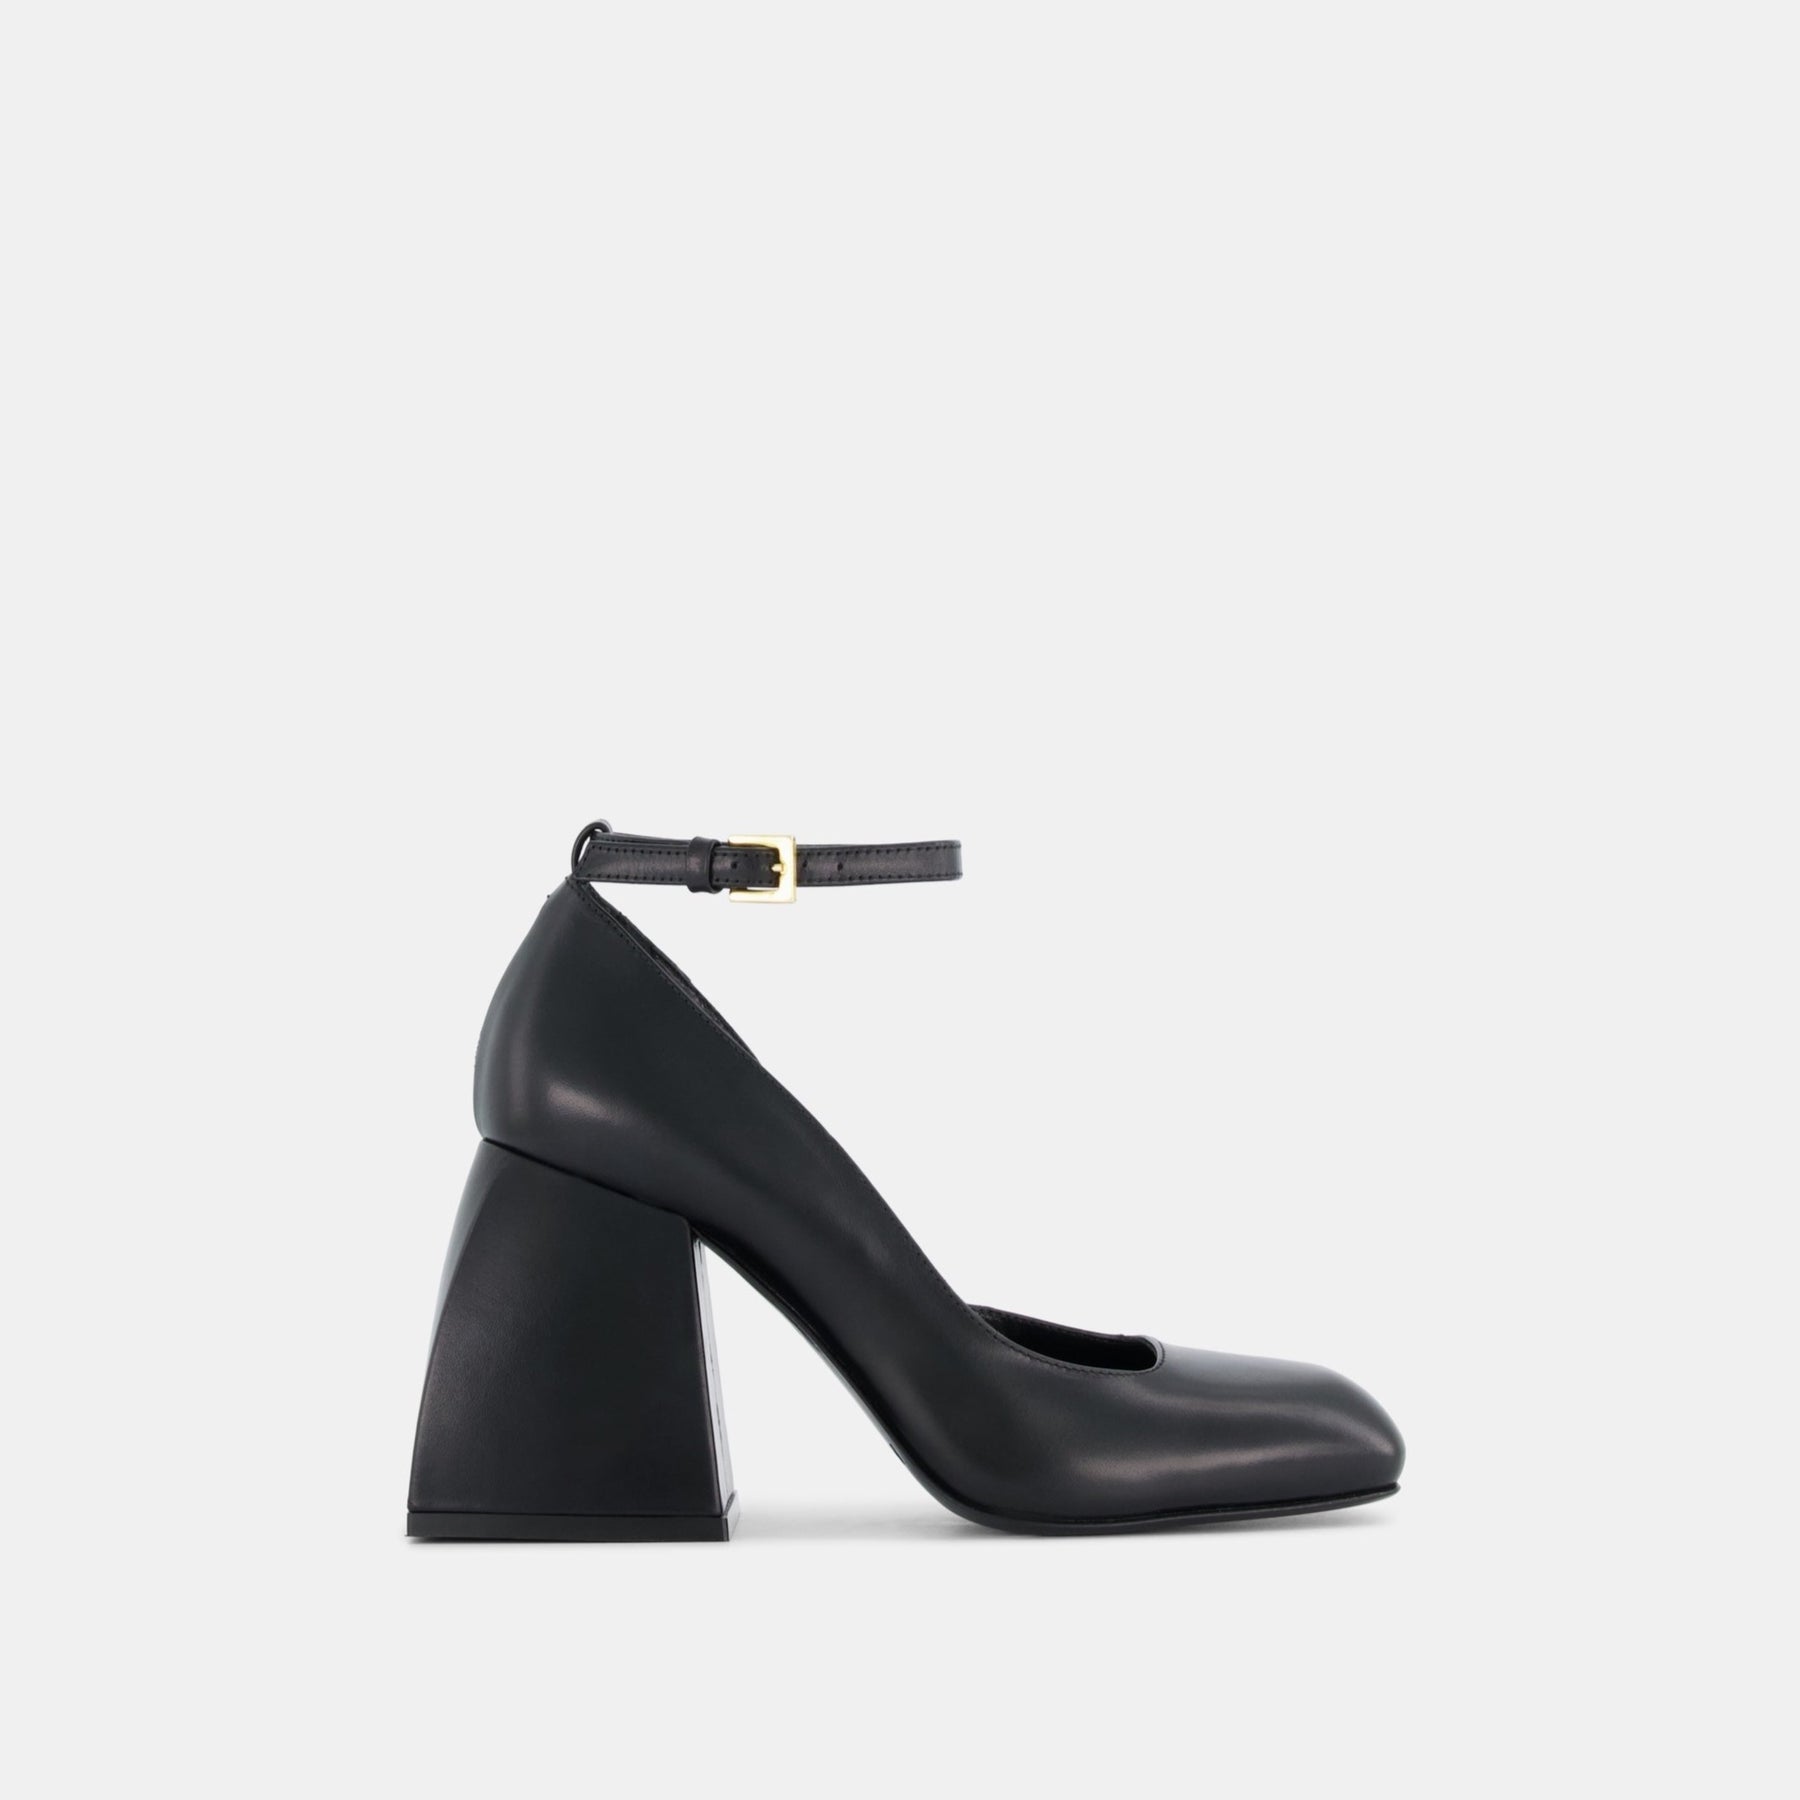 Nodaleto pump high heel shoe in black leather